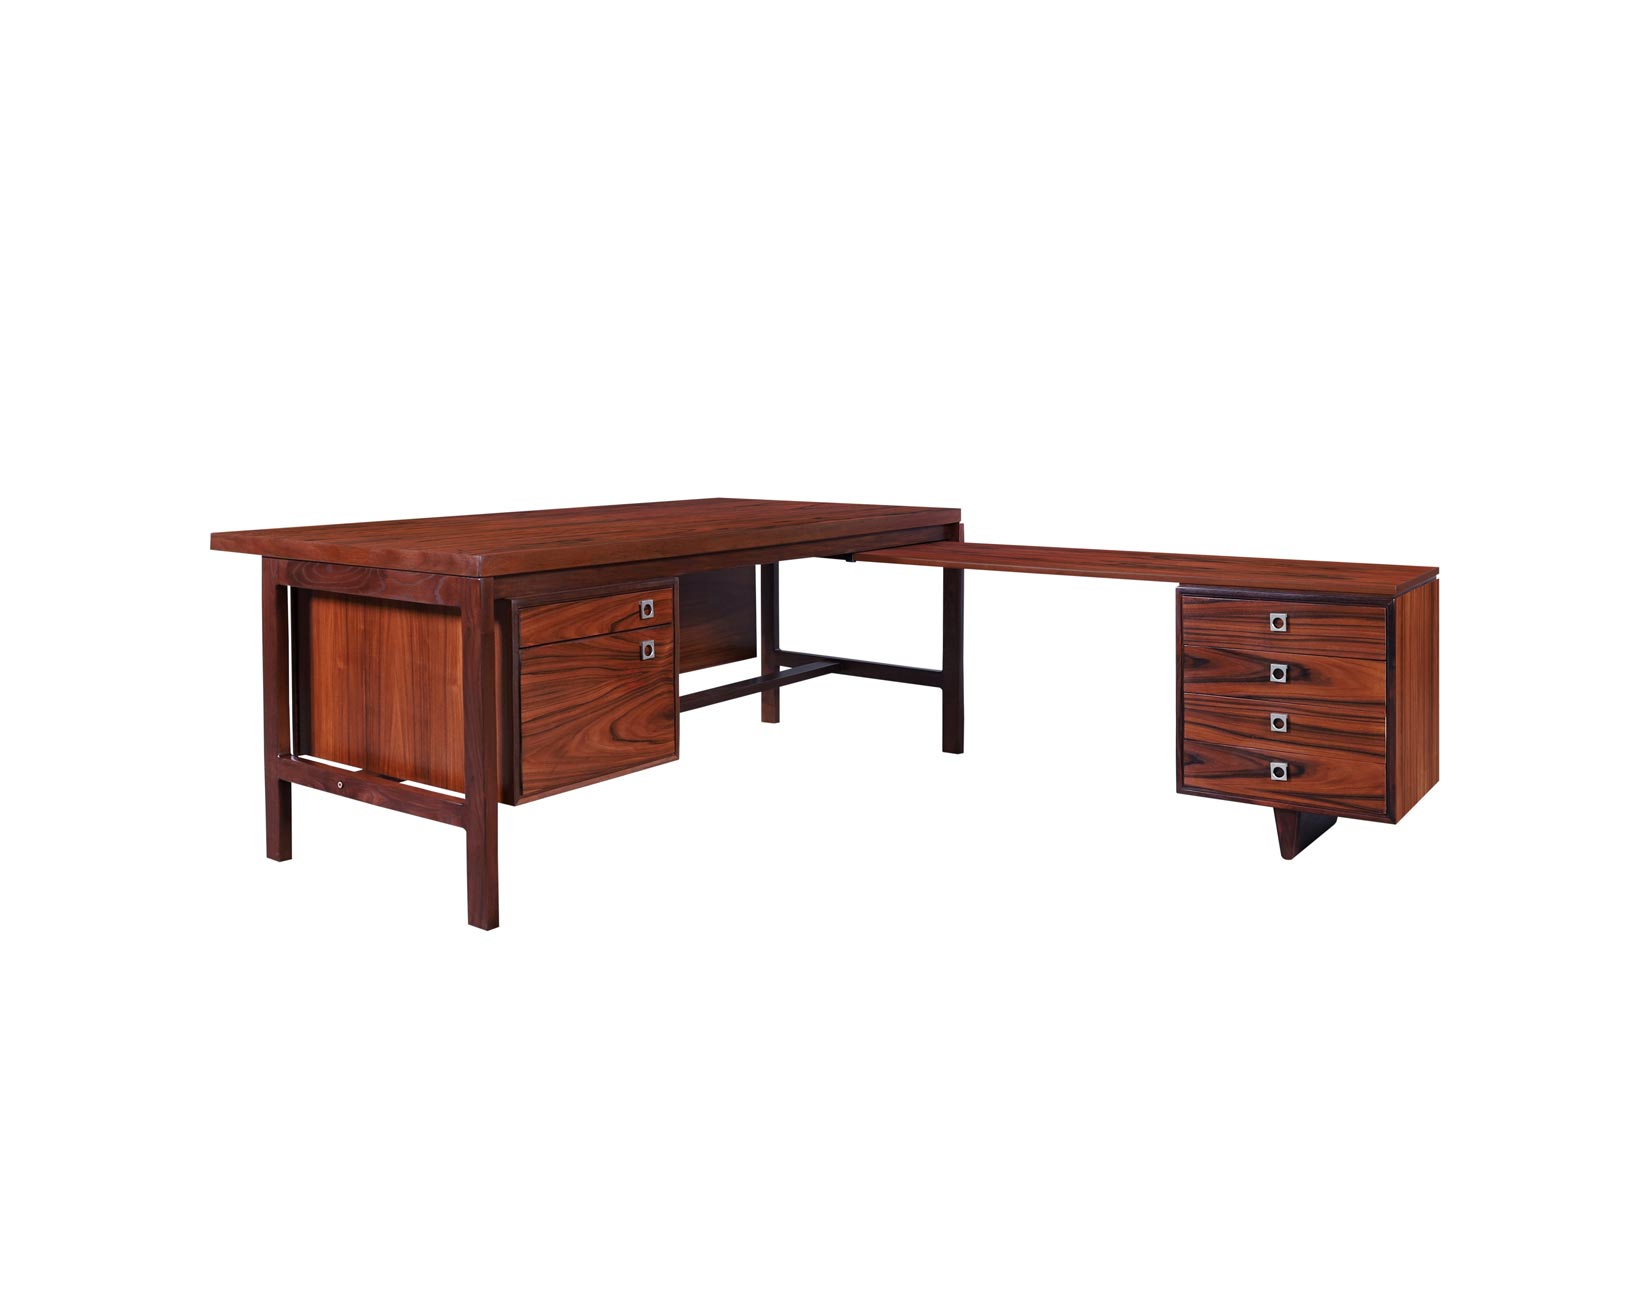 Danish Modern Rosewood L-Shaped Desk by Arne Vodder for H.P. Hansen